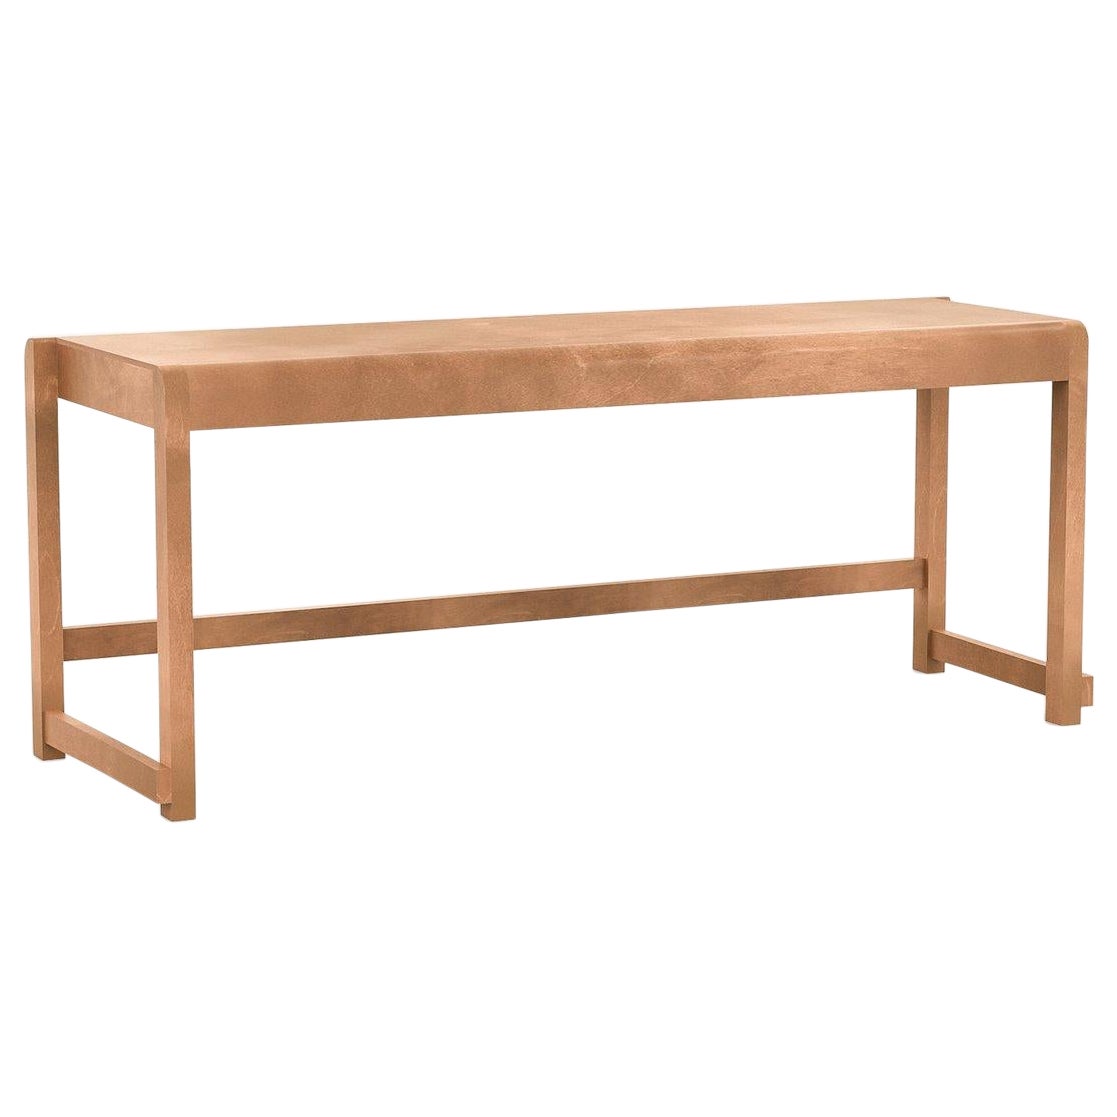 Minimal Scandinavian Design Bench 01 in Warm Brown Wood For Sale